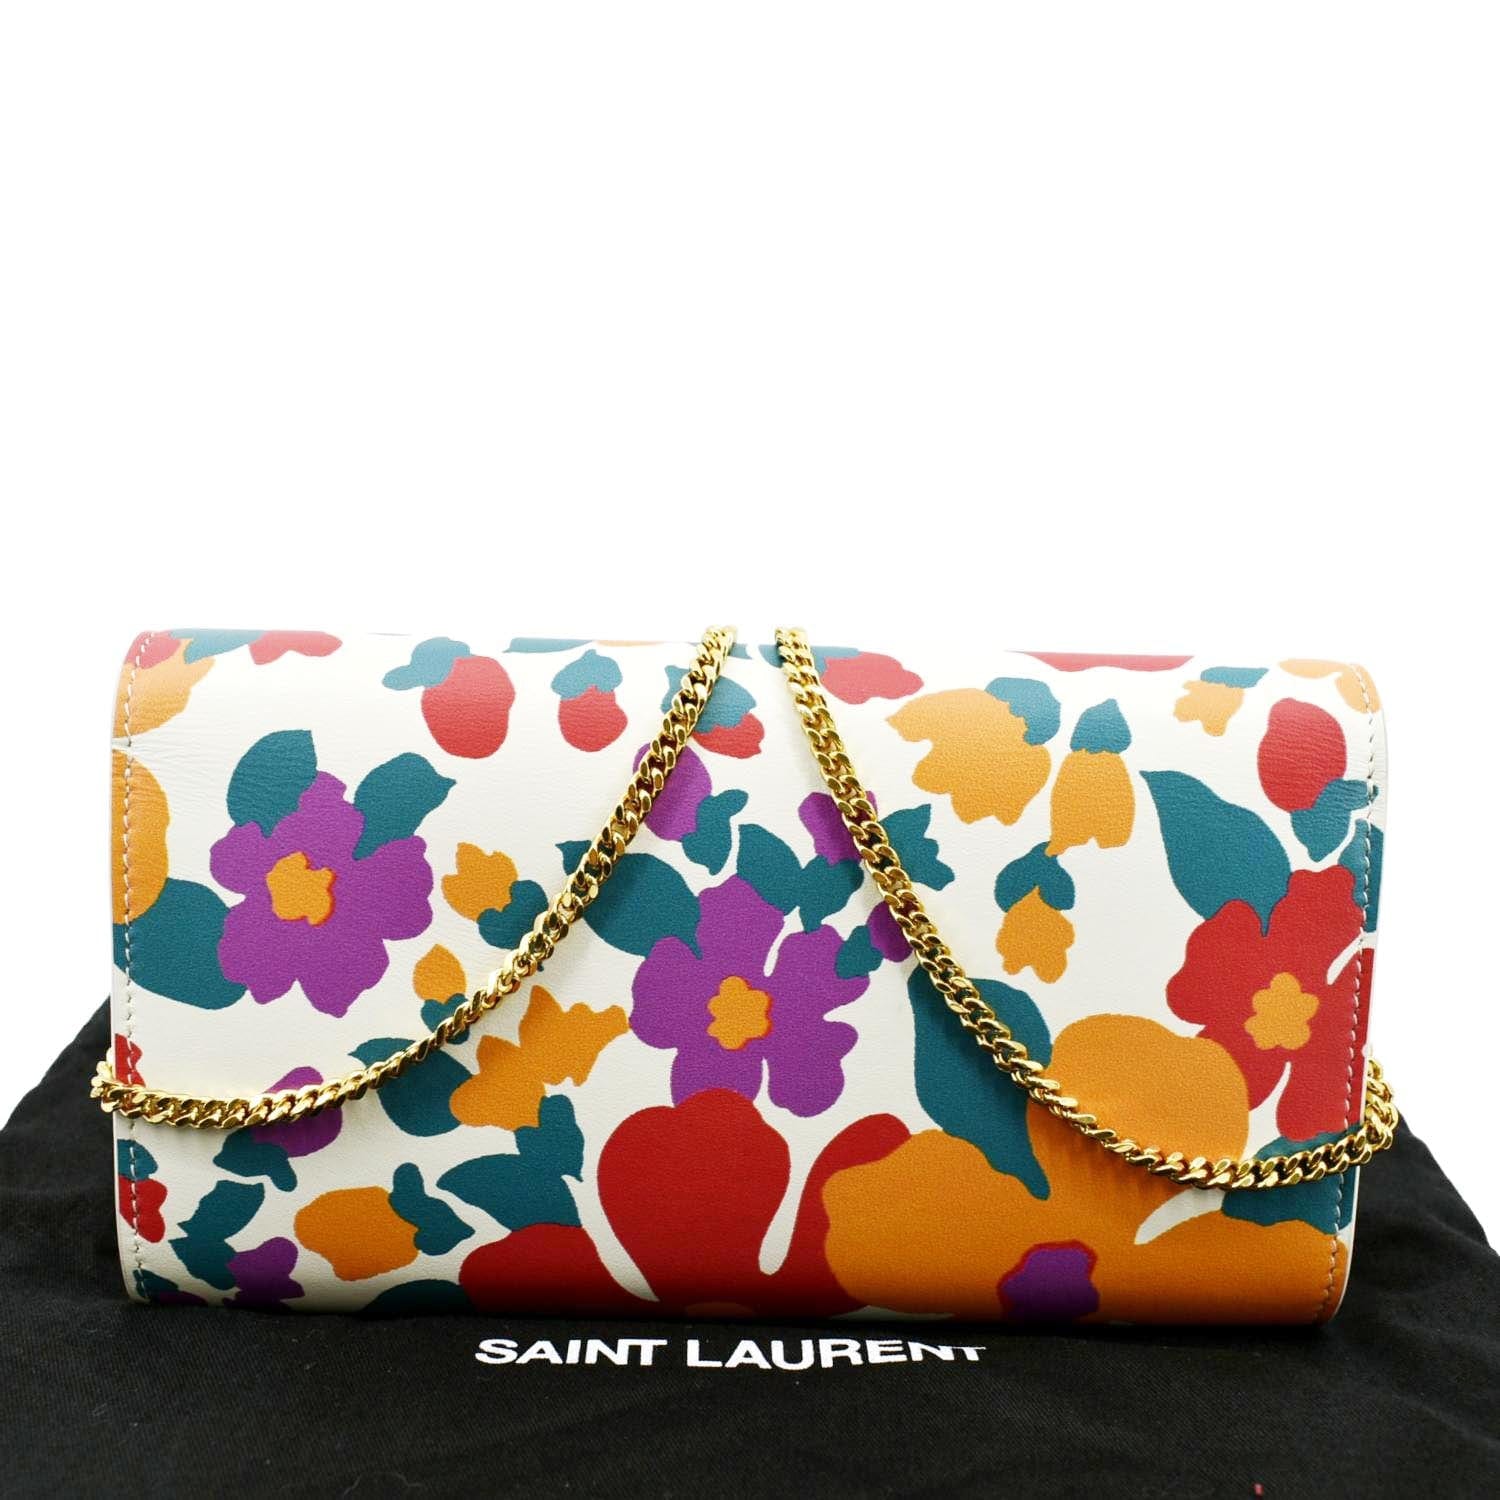 Saint Laurent Bags, YSL Handbags, Totes, Clutch